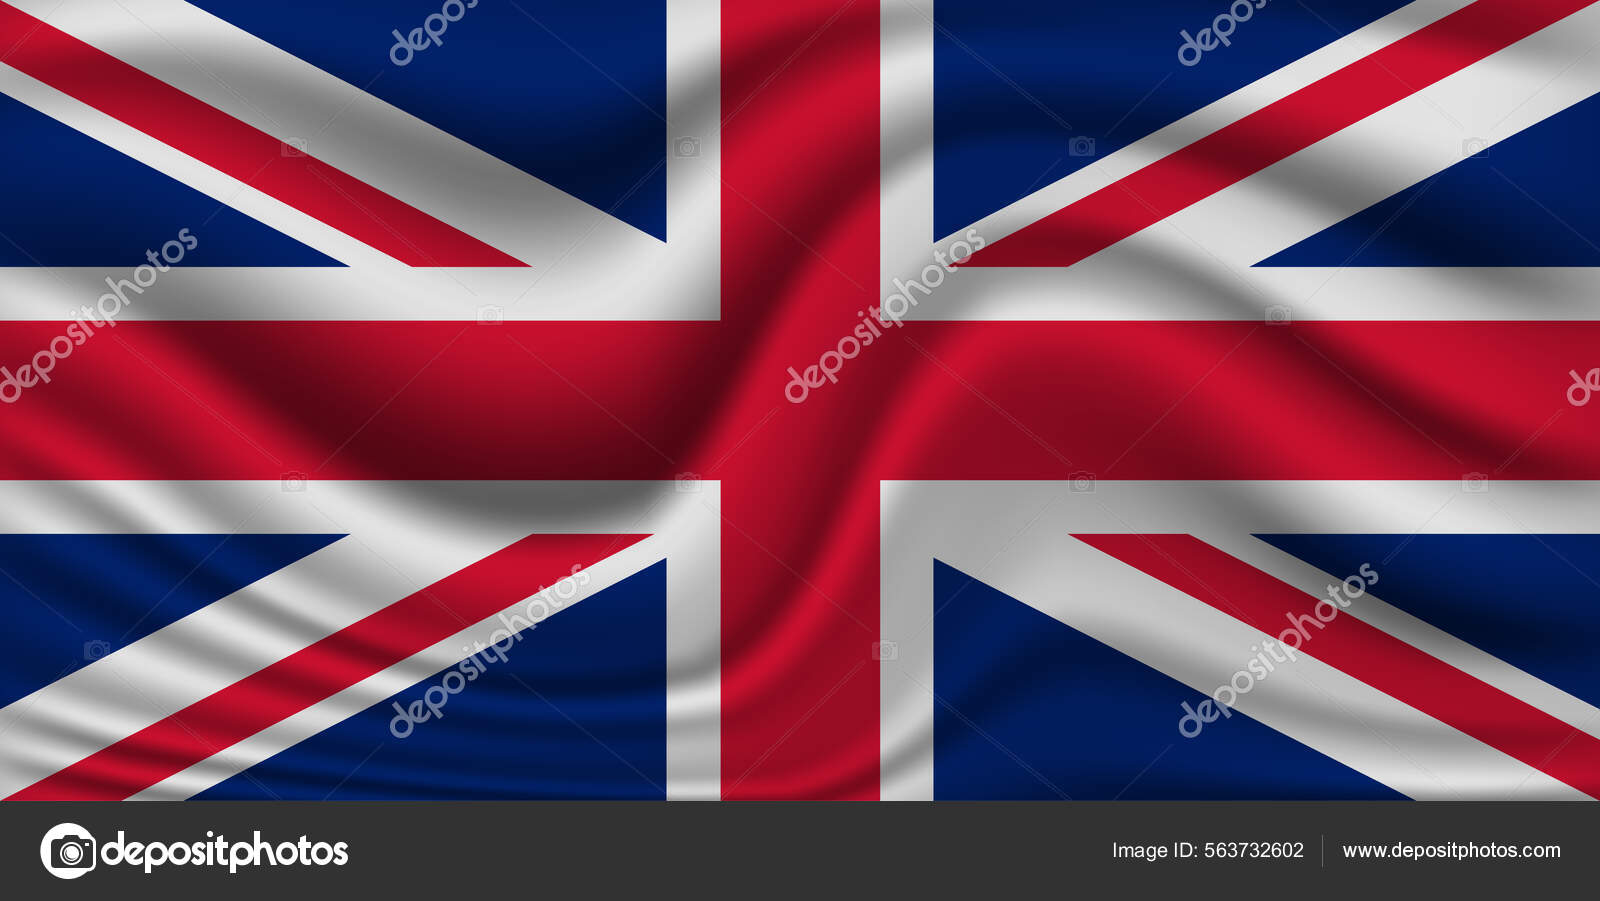 https://st.depositphotos.com/53566182/56373/v/1600/depositphotos_563732602-stock-illustration-flag-union-jack-england-united.jpg